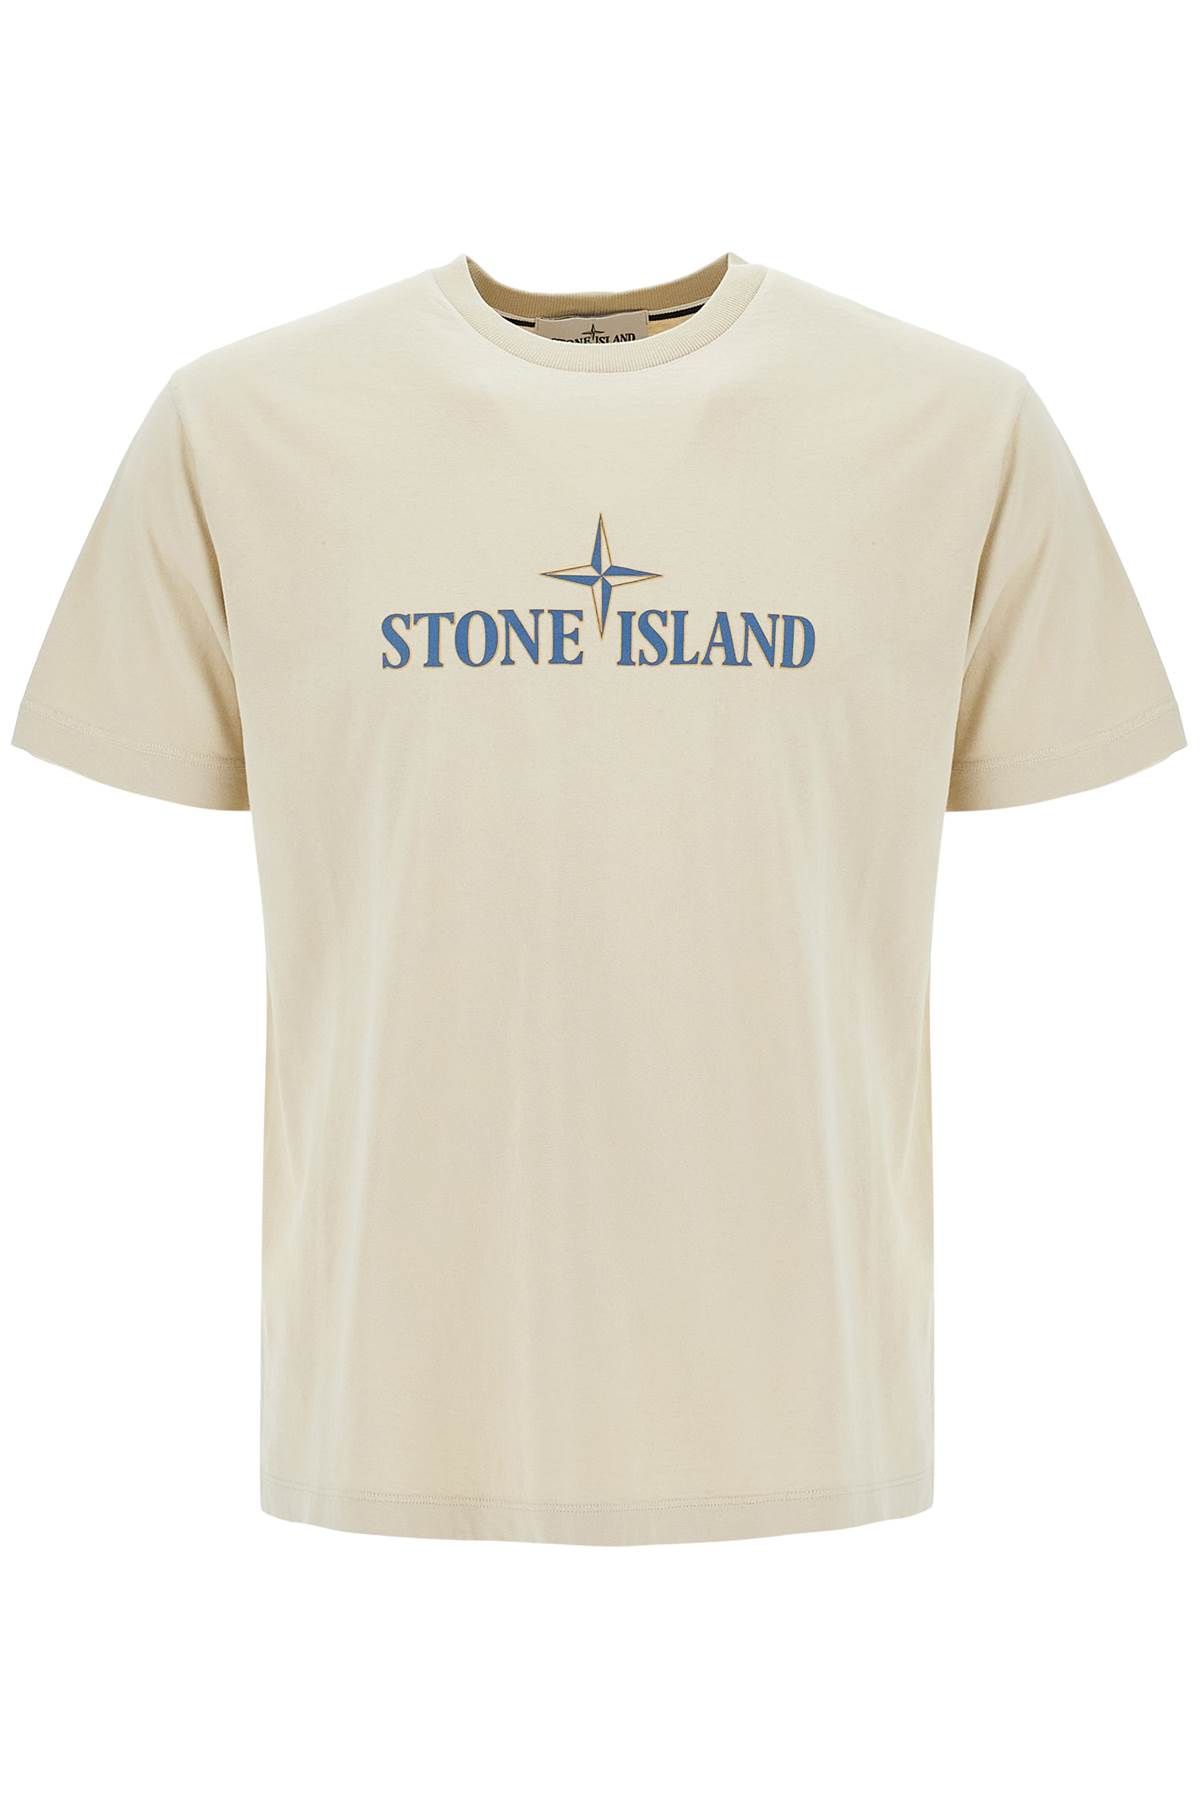 Stone Island STONE ISLAND regular fit logo t-shirt